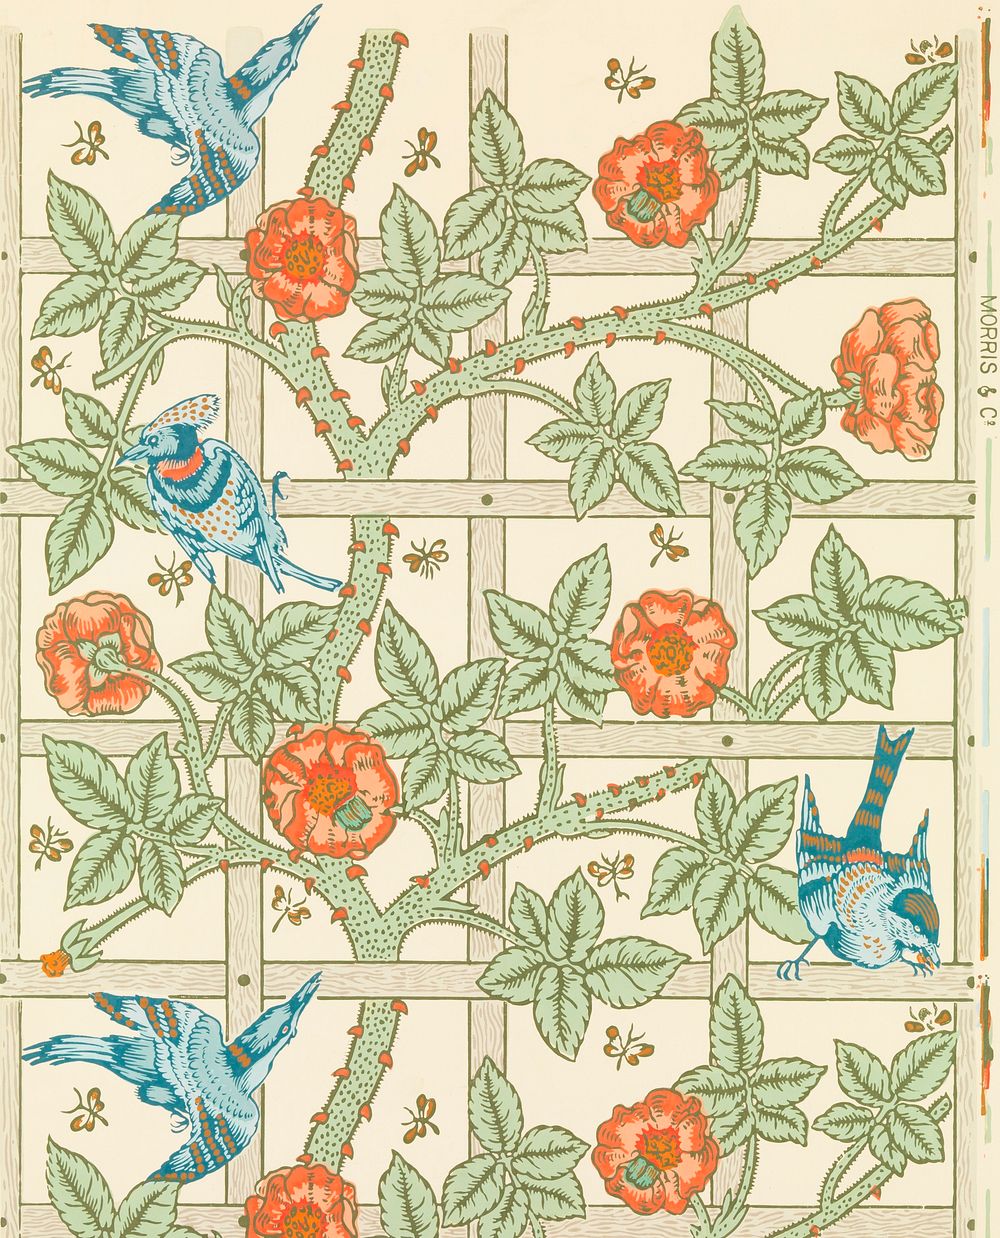 William Morris's (1834-1896) Trellis famous pattern. Original from The MET Museum. Digitally enhanced by rawpixel.